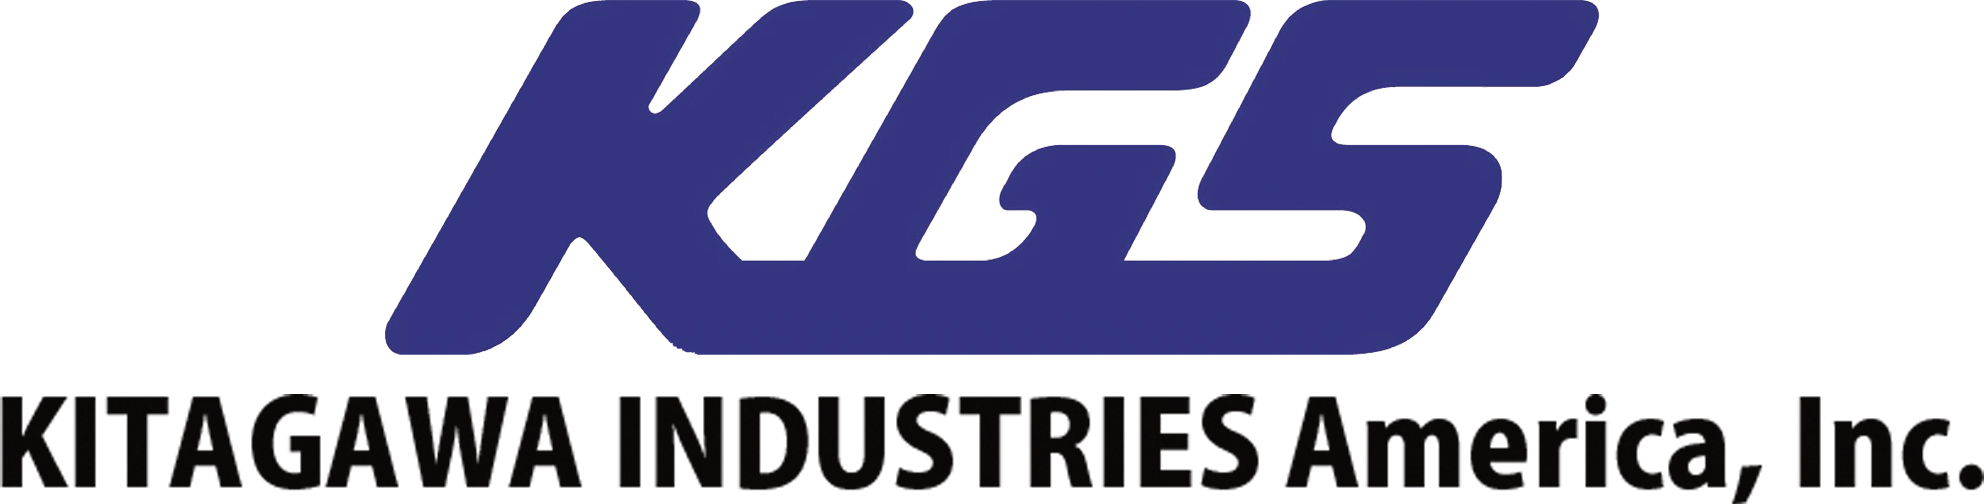 KGS Kitagawa Industries America, Inc. logo